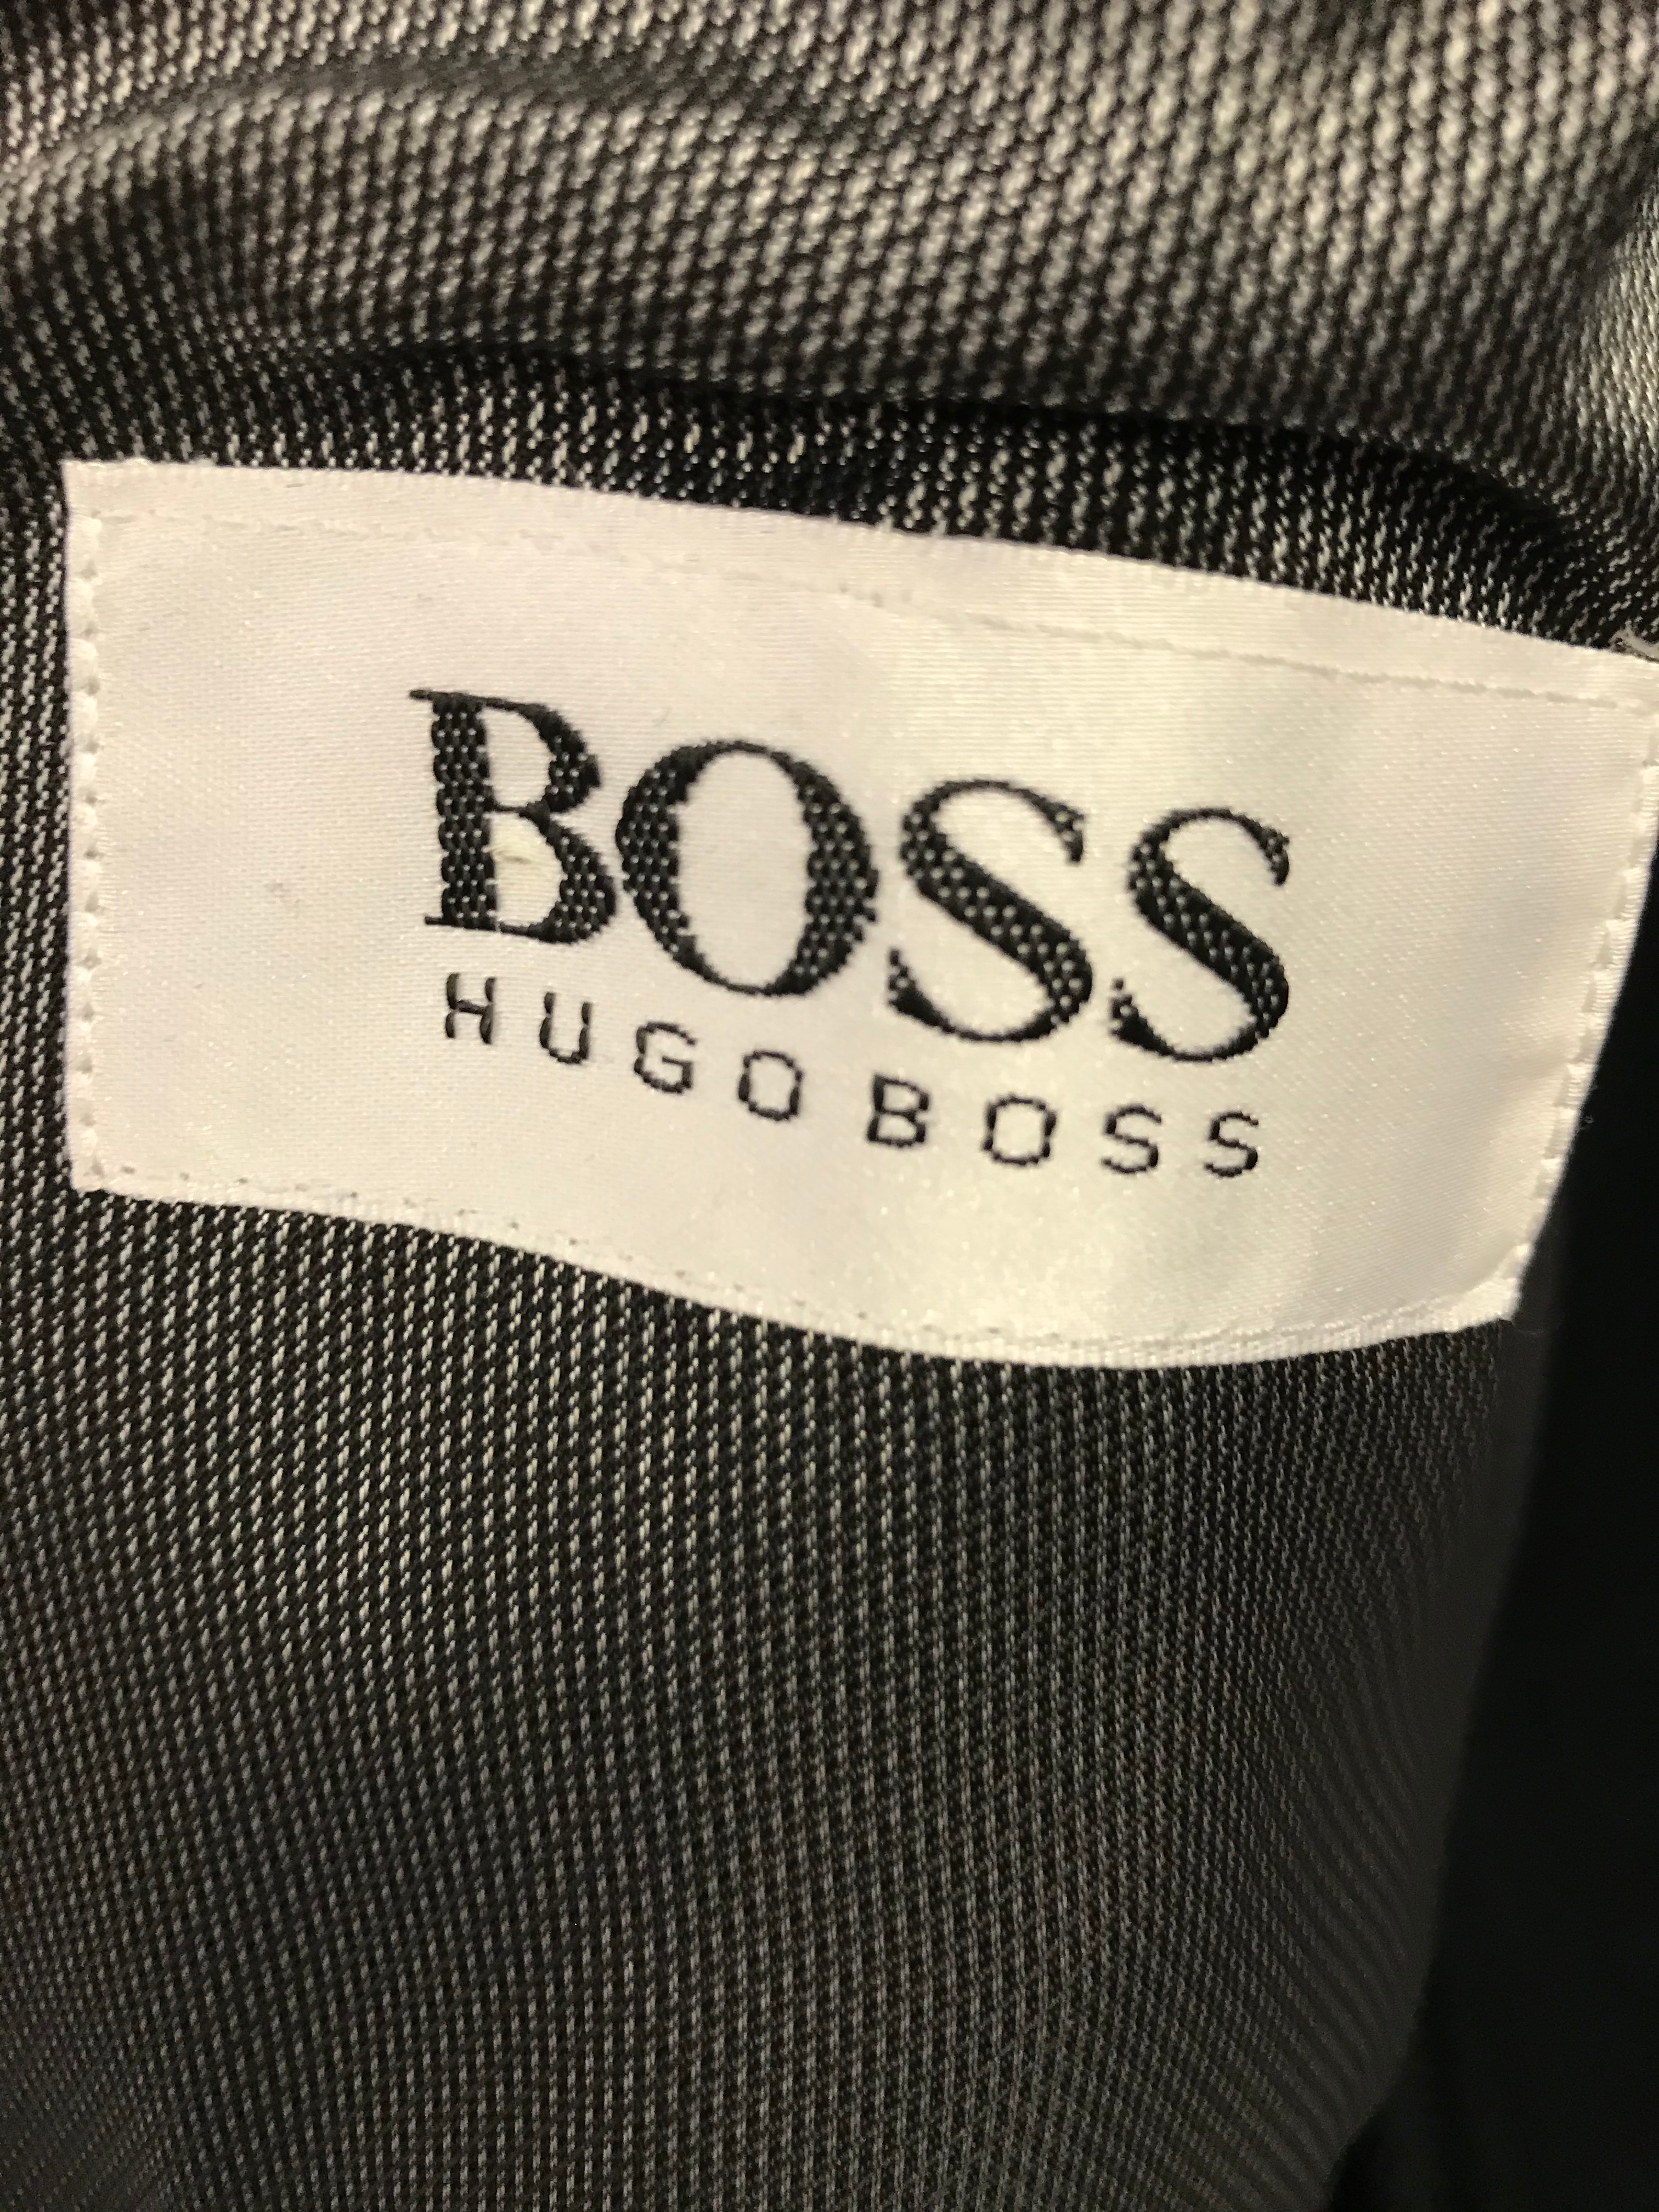 Hugo Boss Suits